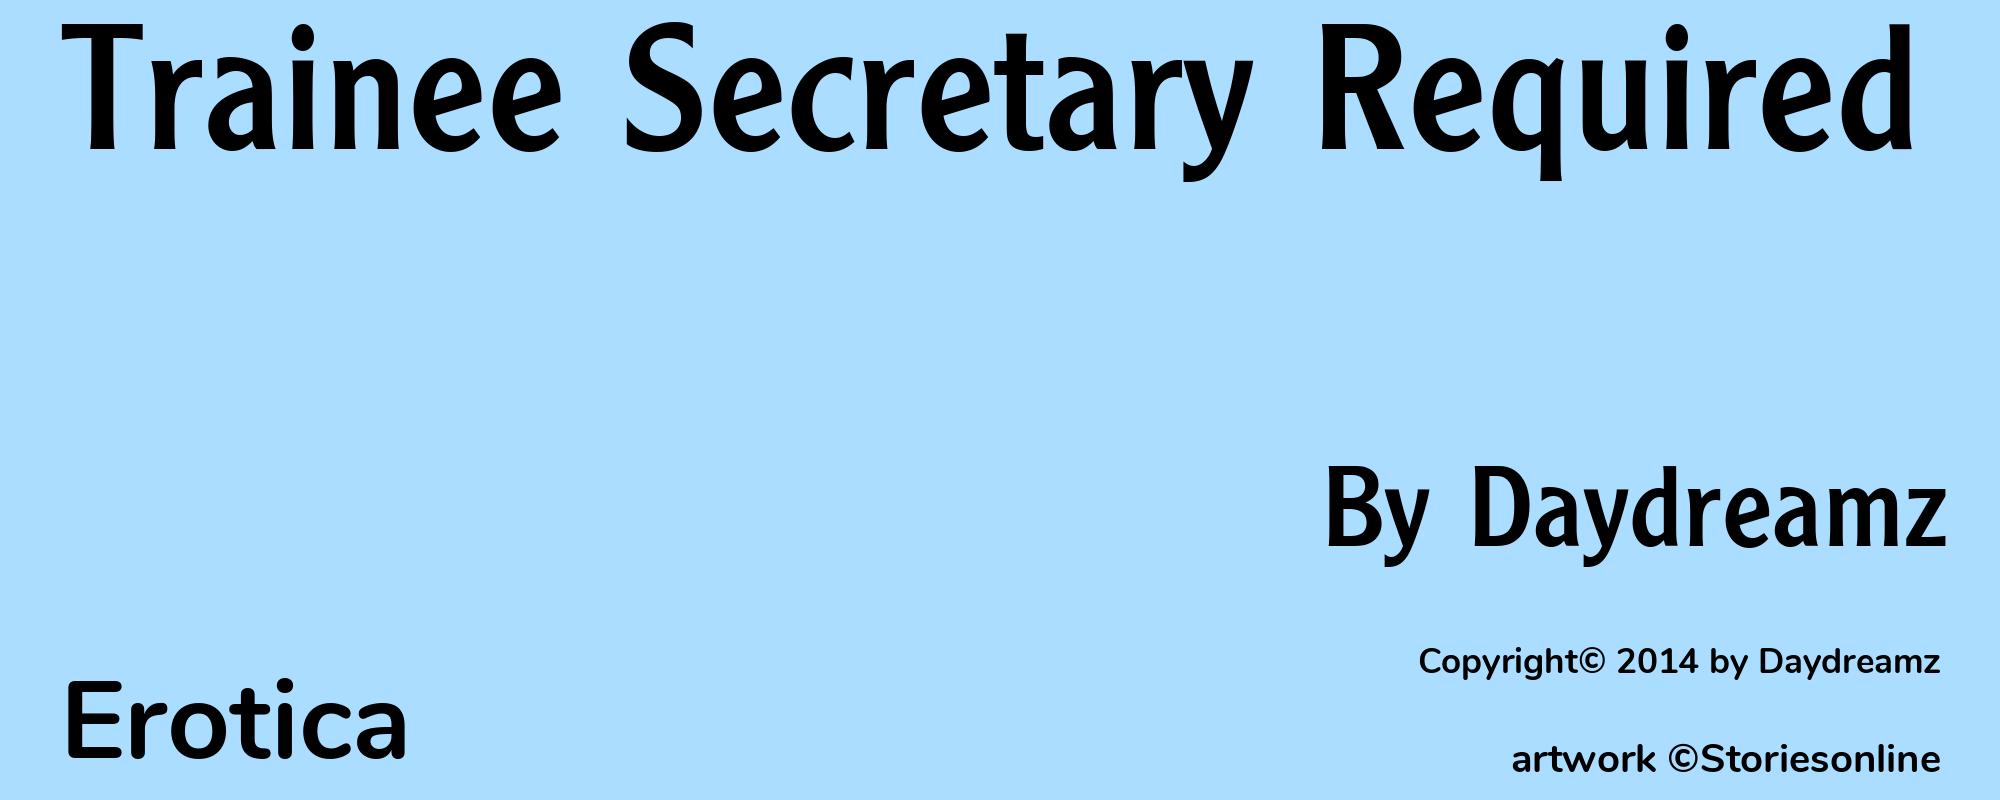 Trainee Secretary Required - Cover